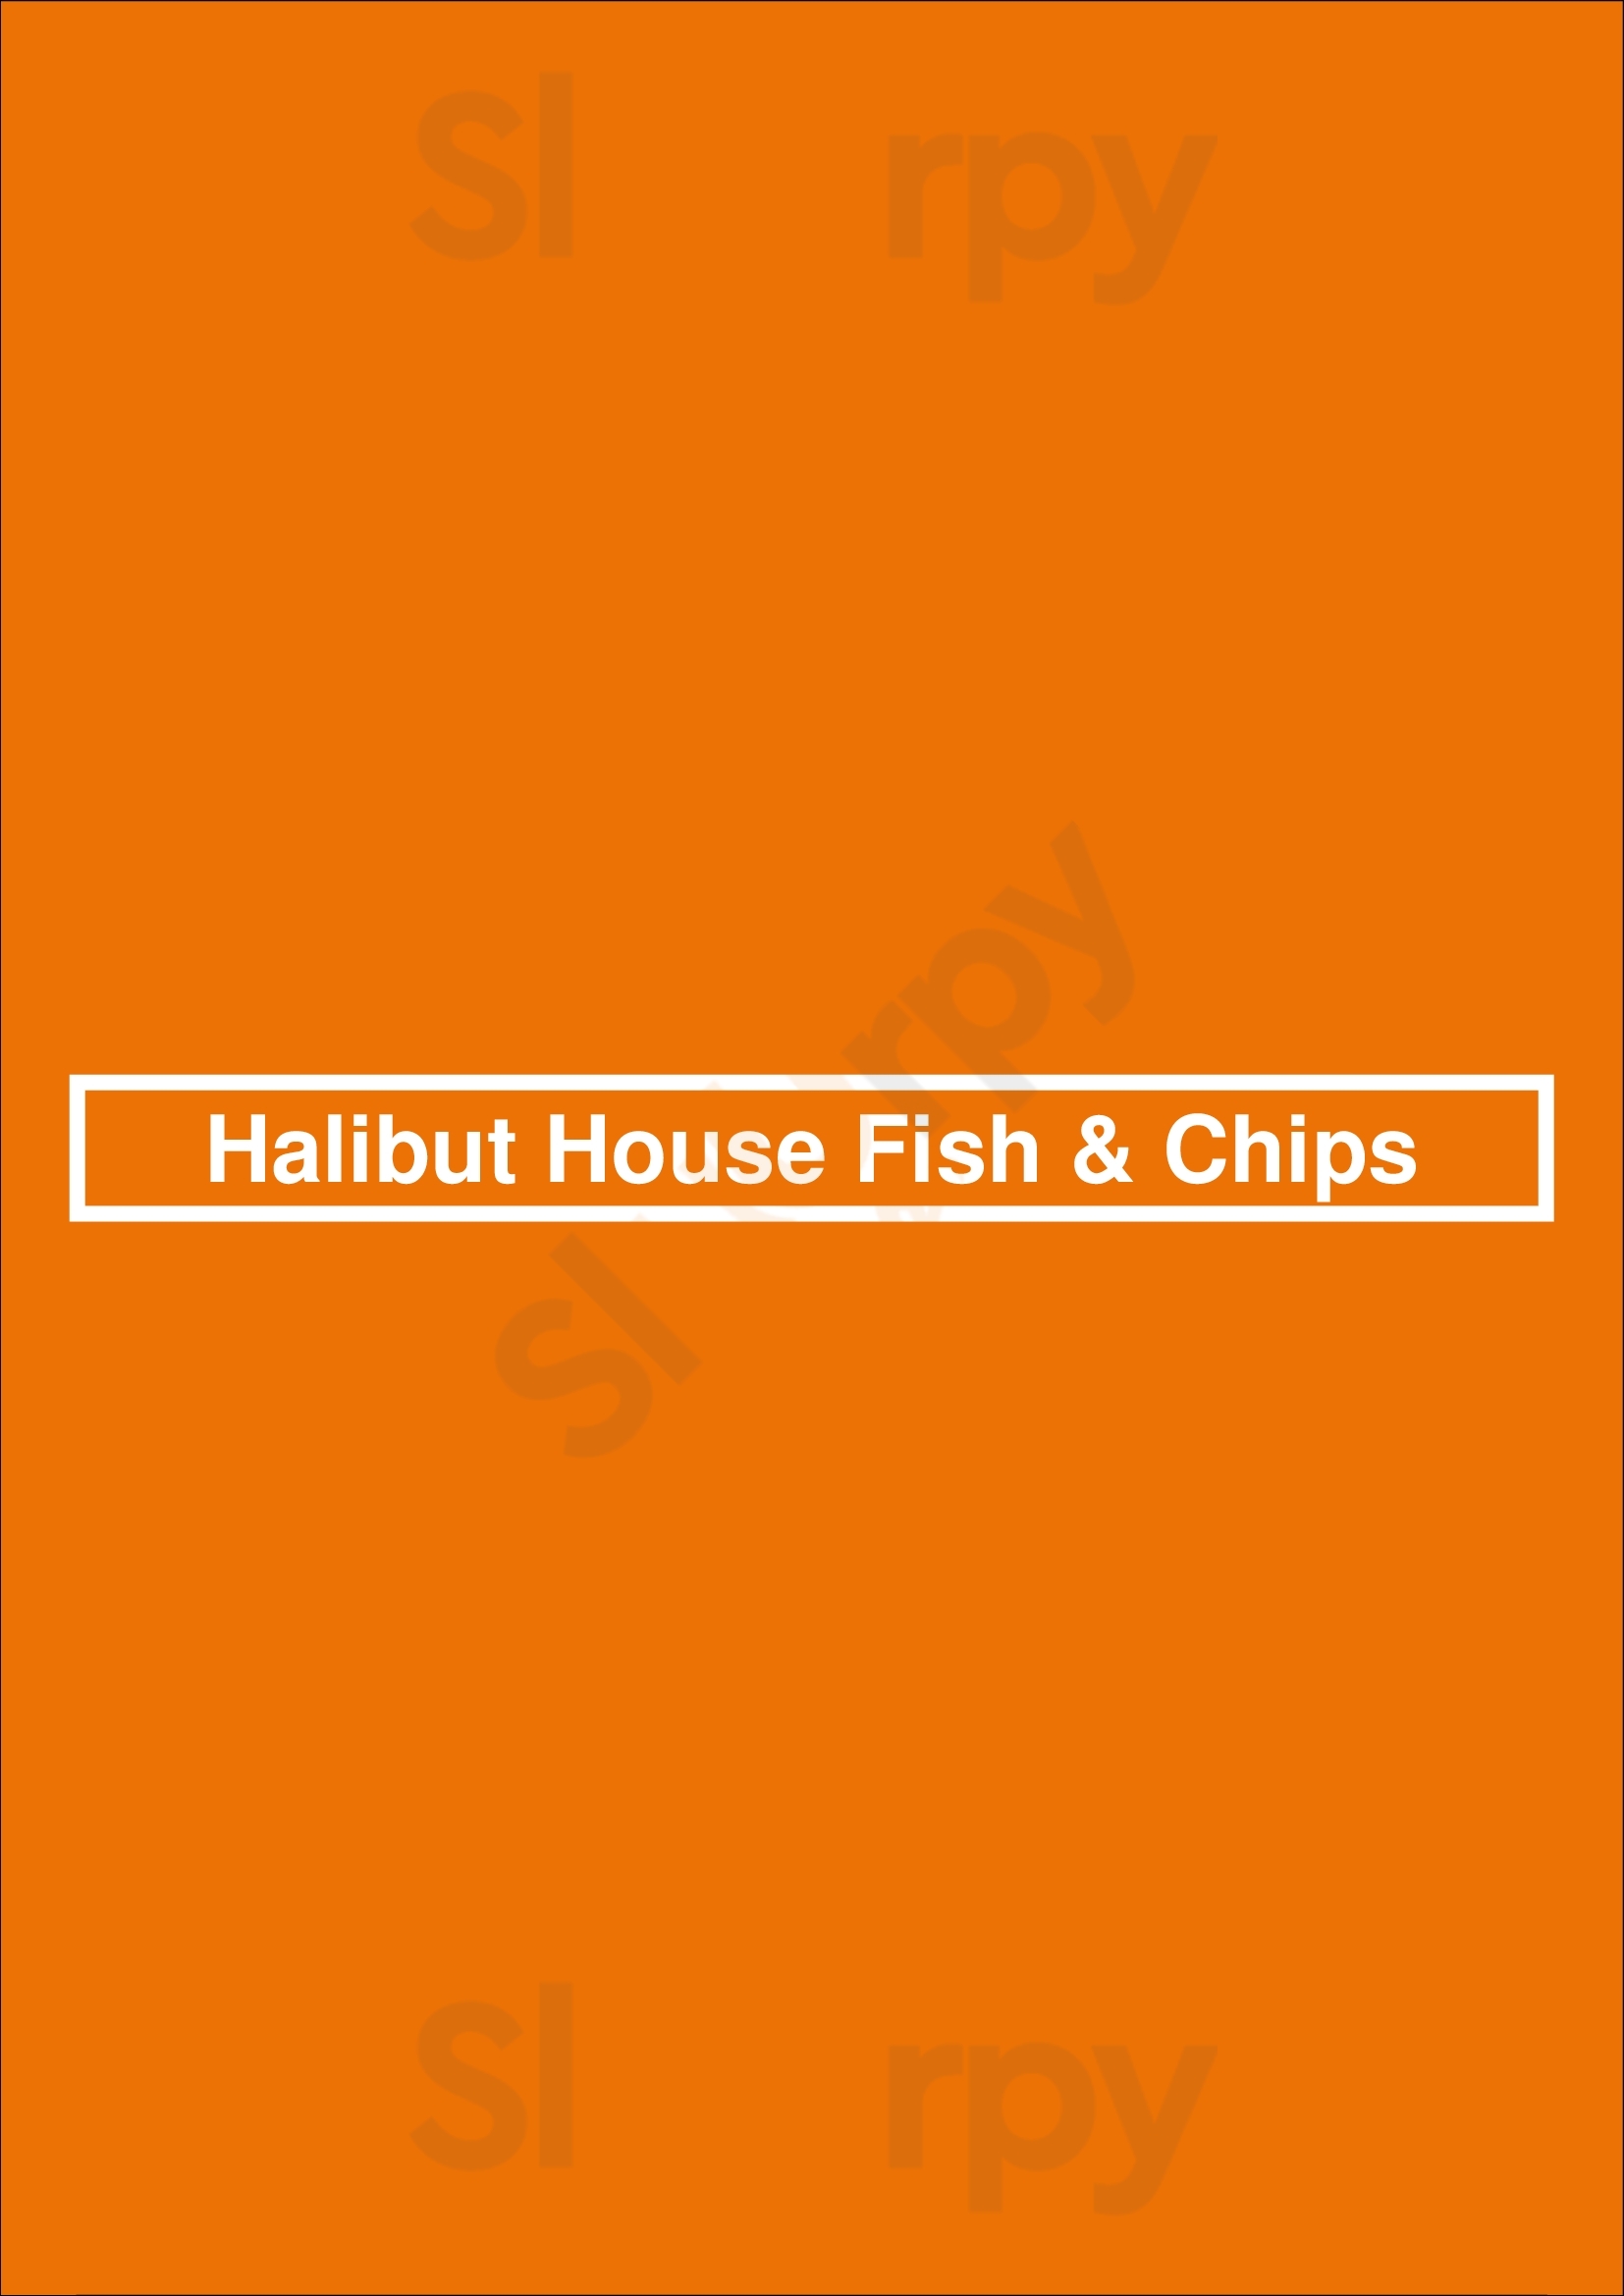 Halibut House Fish & Chips Pickering Menu - 1